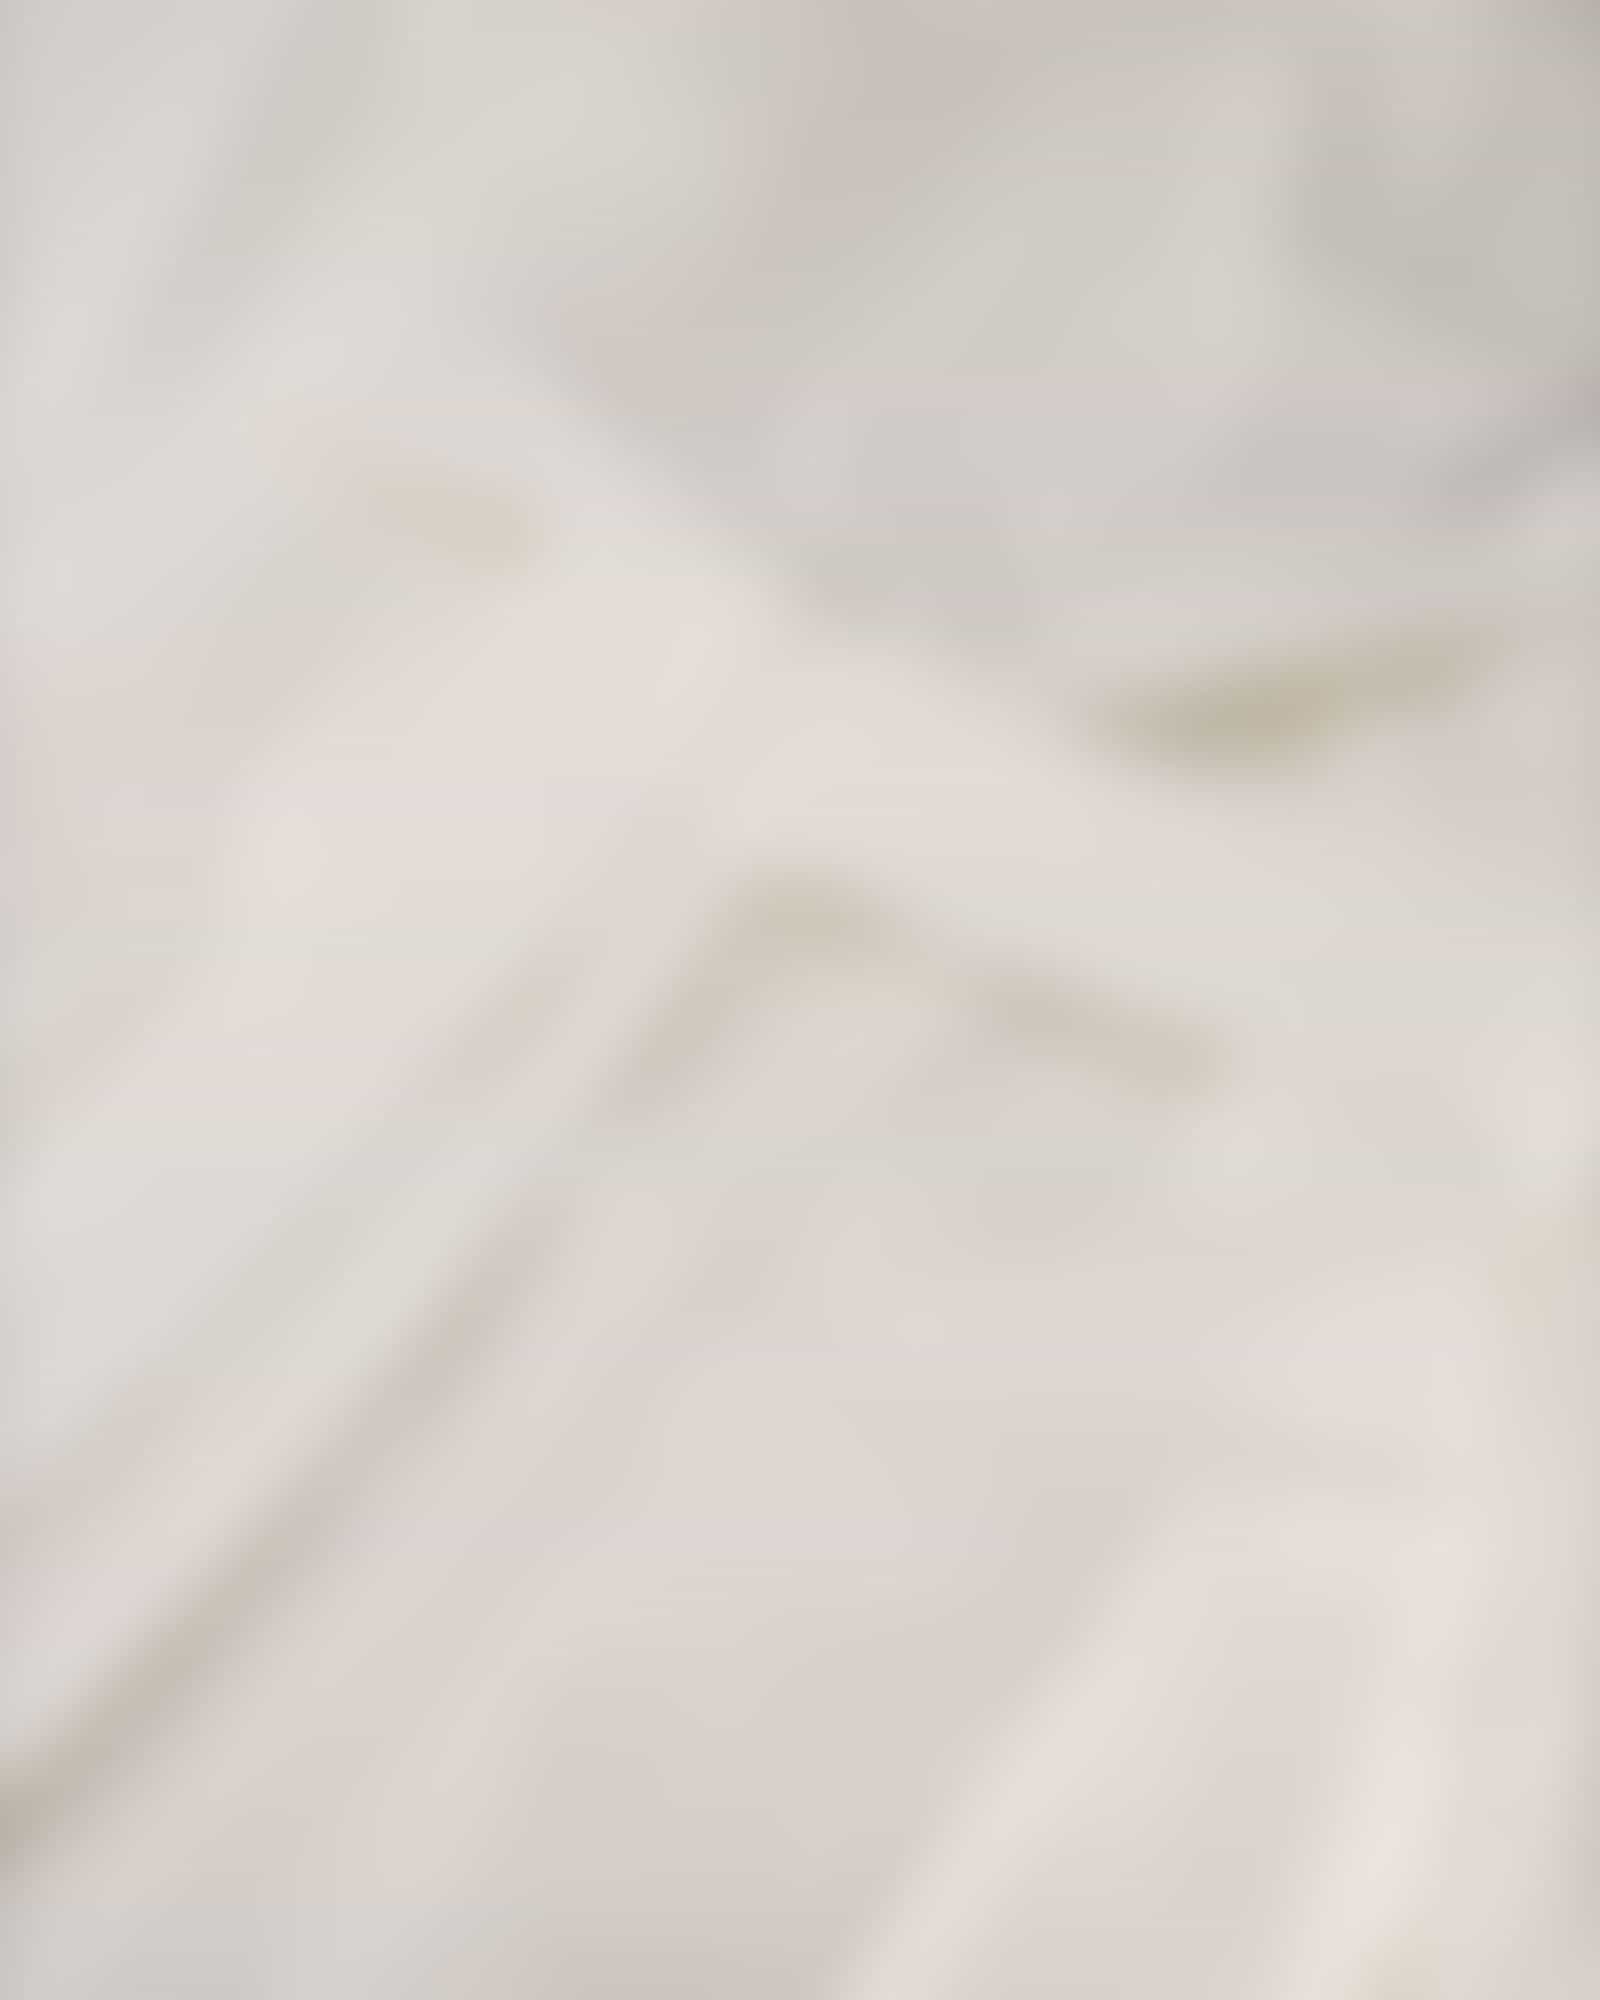 JOOP Herren Bademantel Kimono Pique 1656 - Farbe: Weiß - 600 Detailbild 3